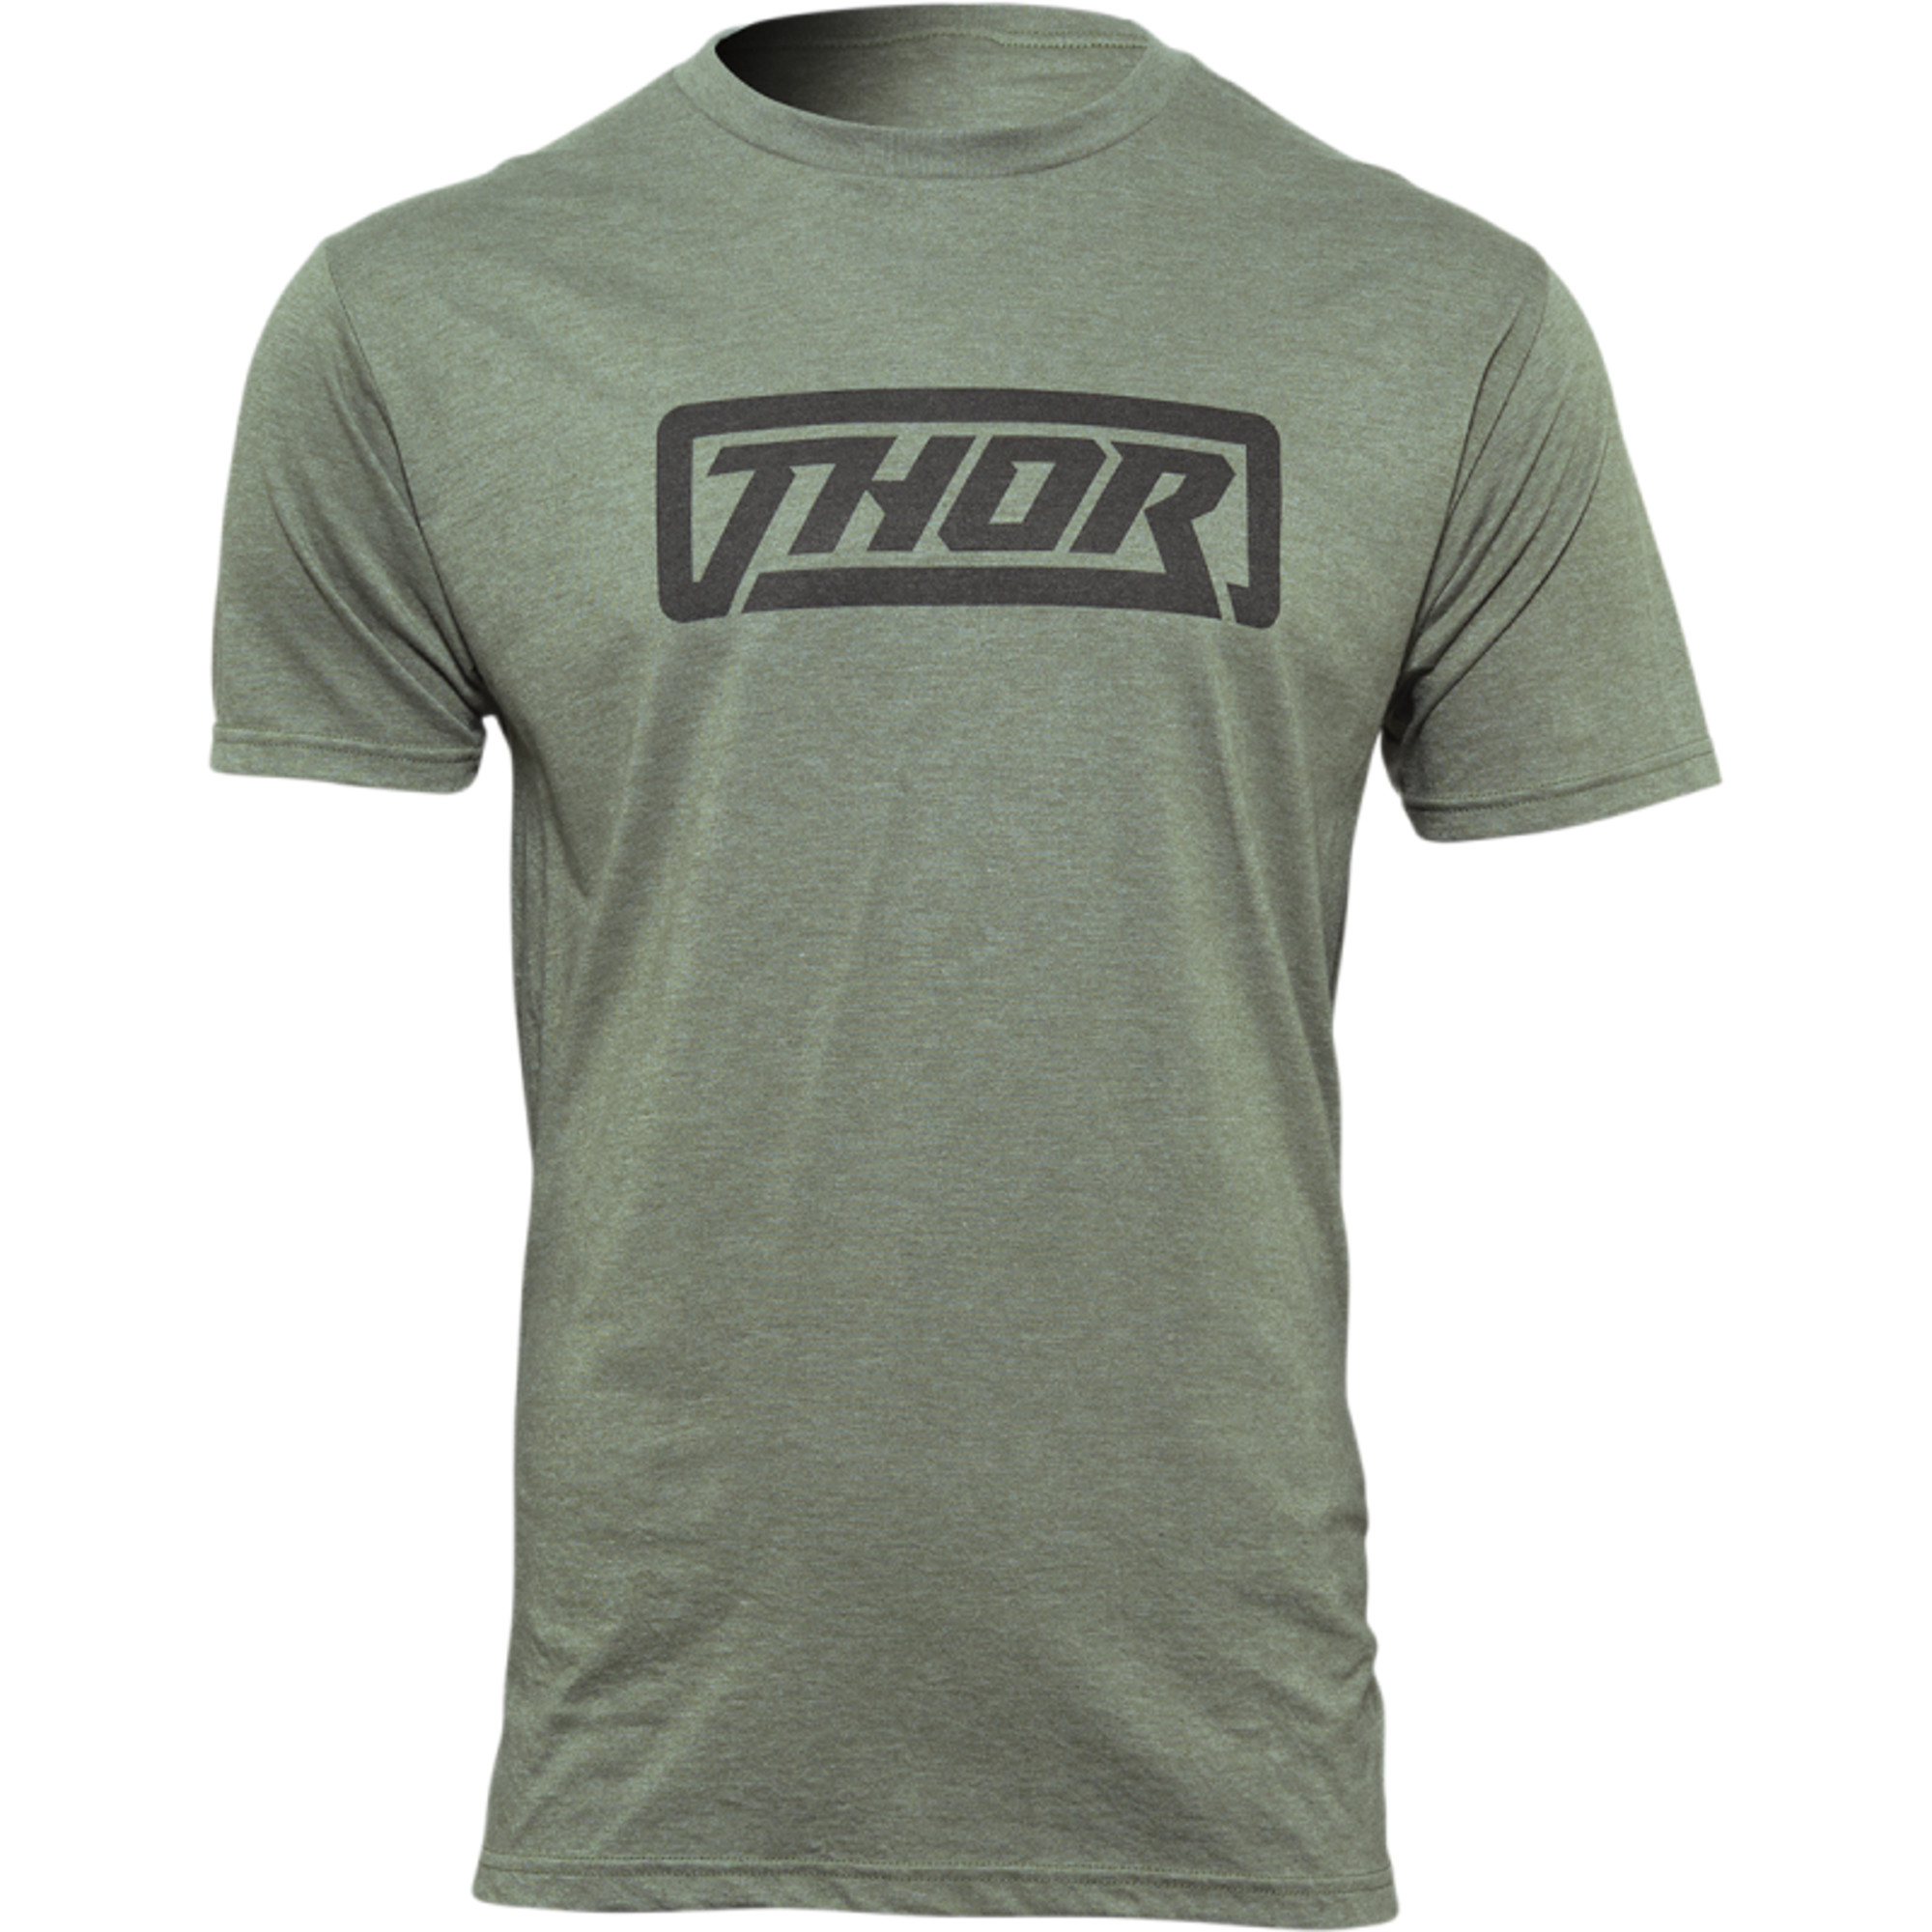 thor t-shirt shirts for men icon